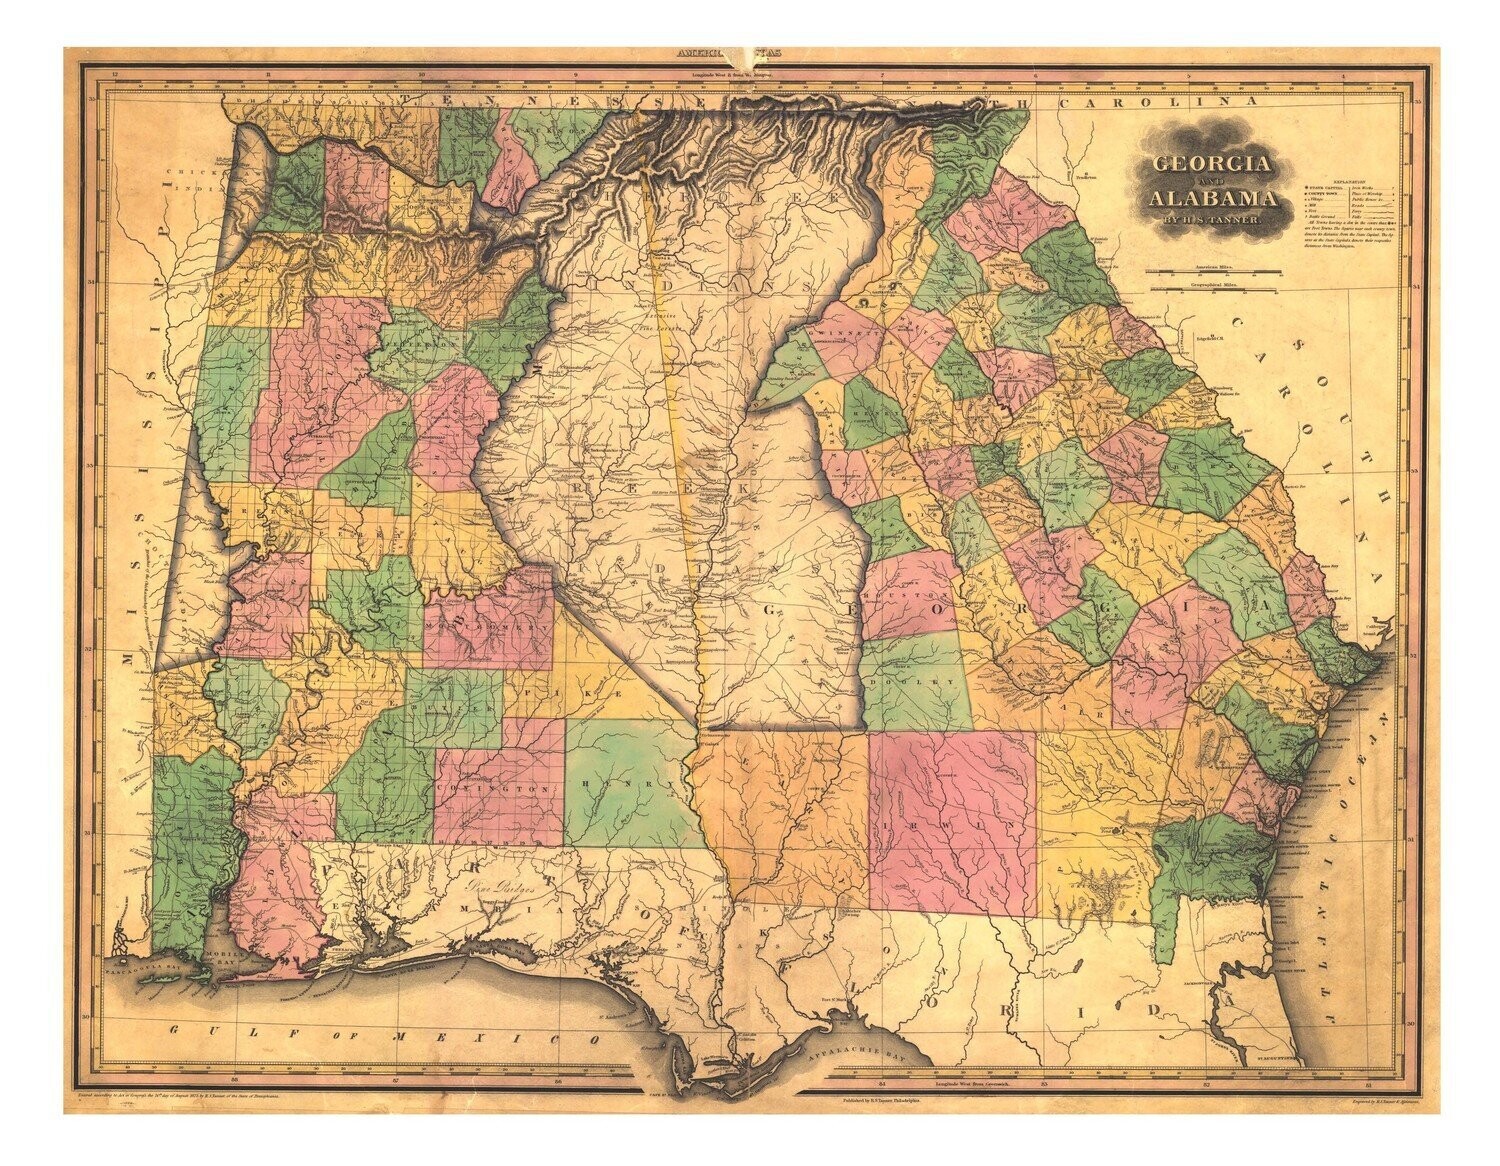 1823 Tanner Map of Alabama and Georgia